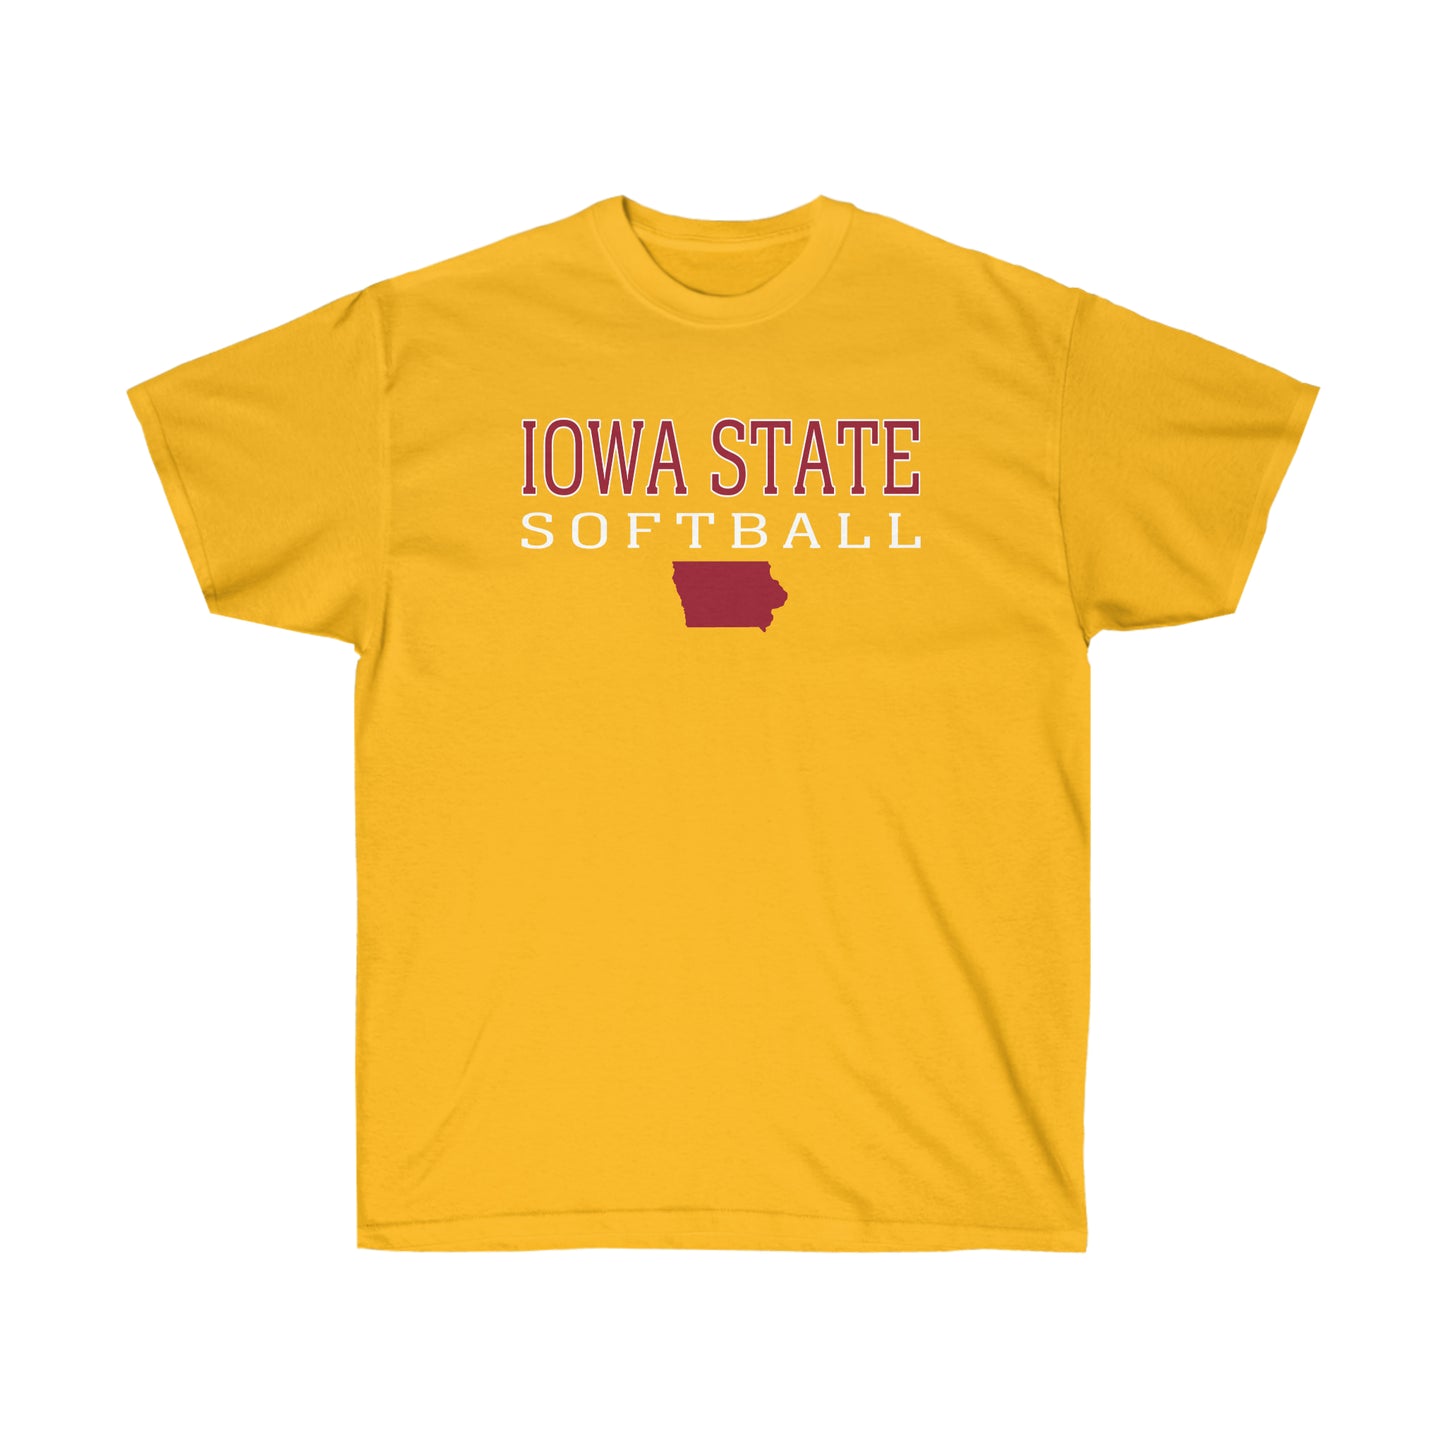 Iowa State x West Virginia T-Shirt